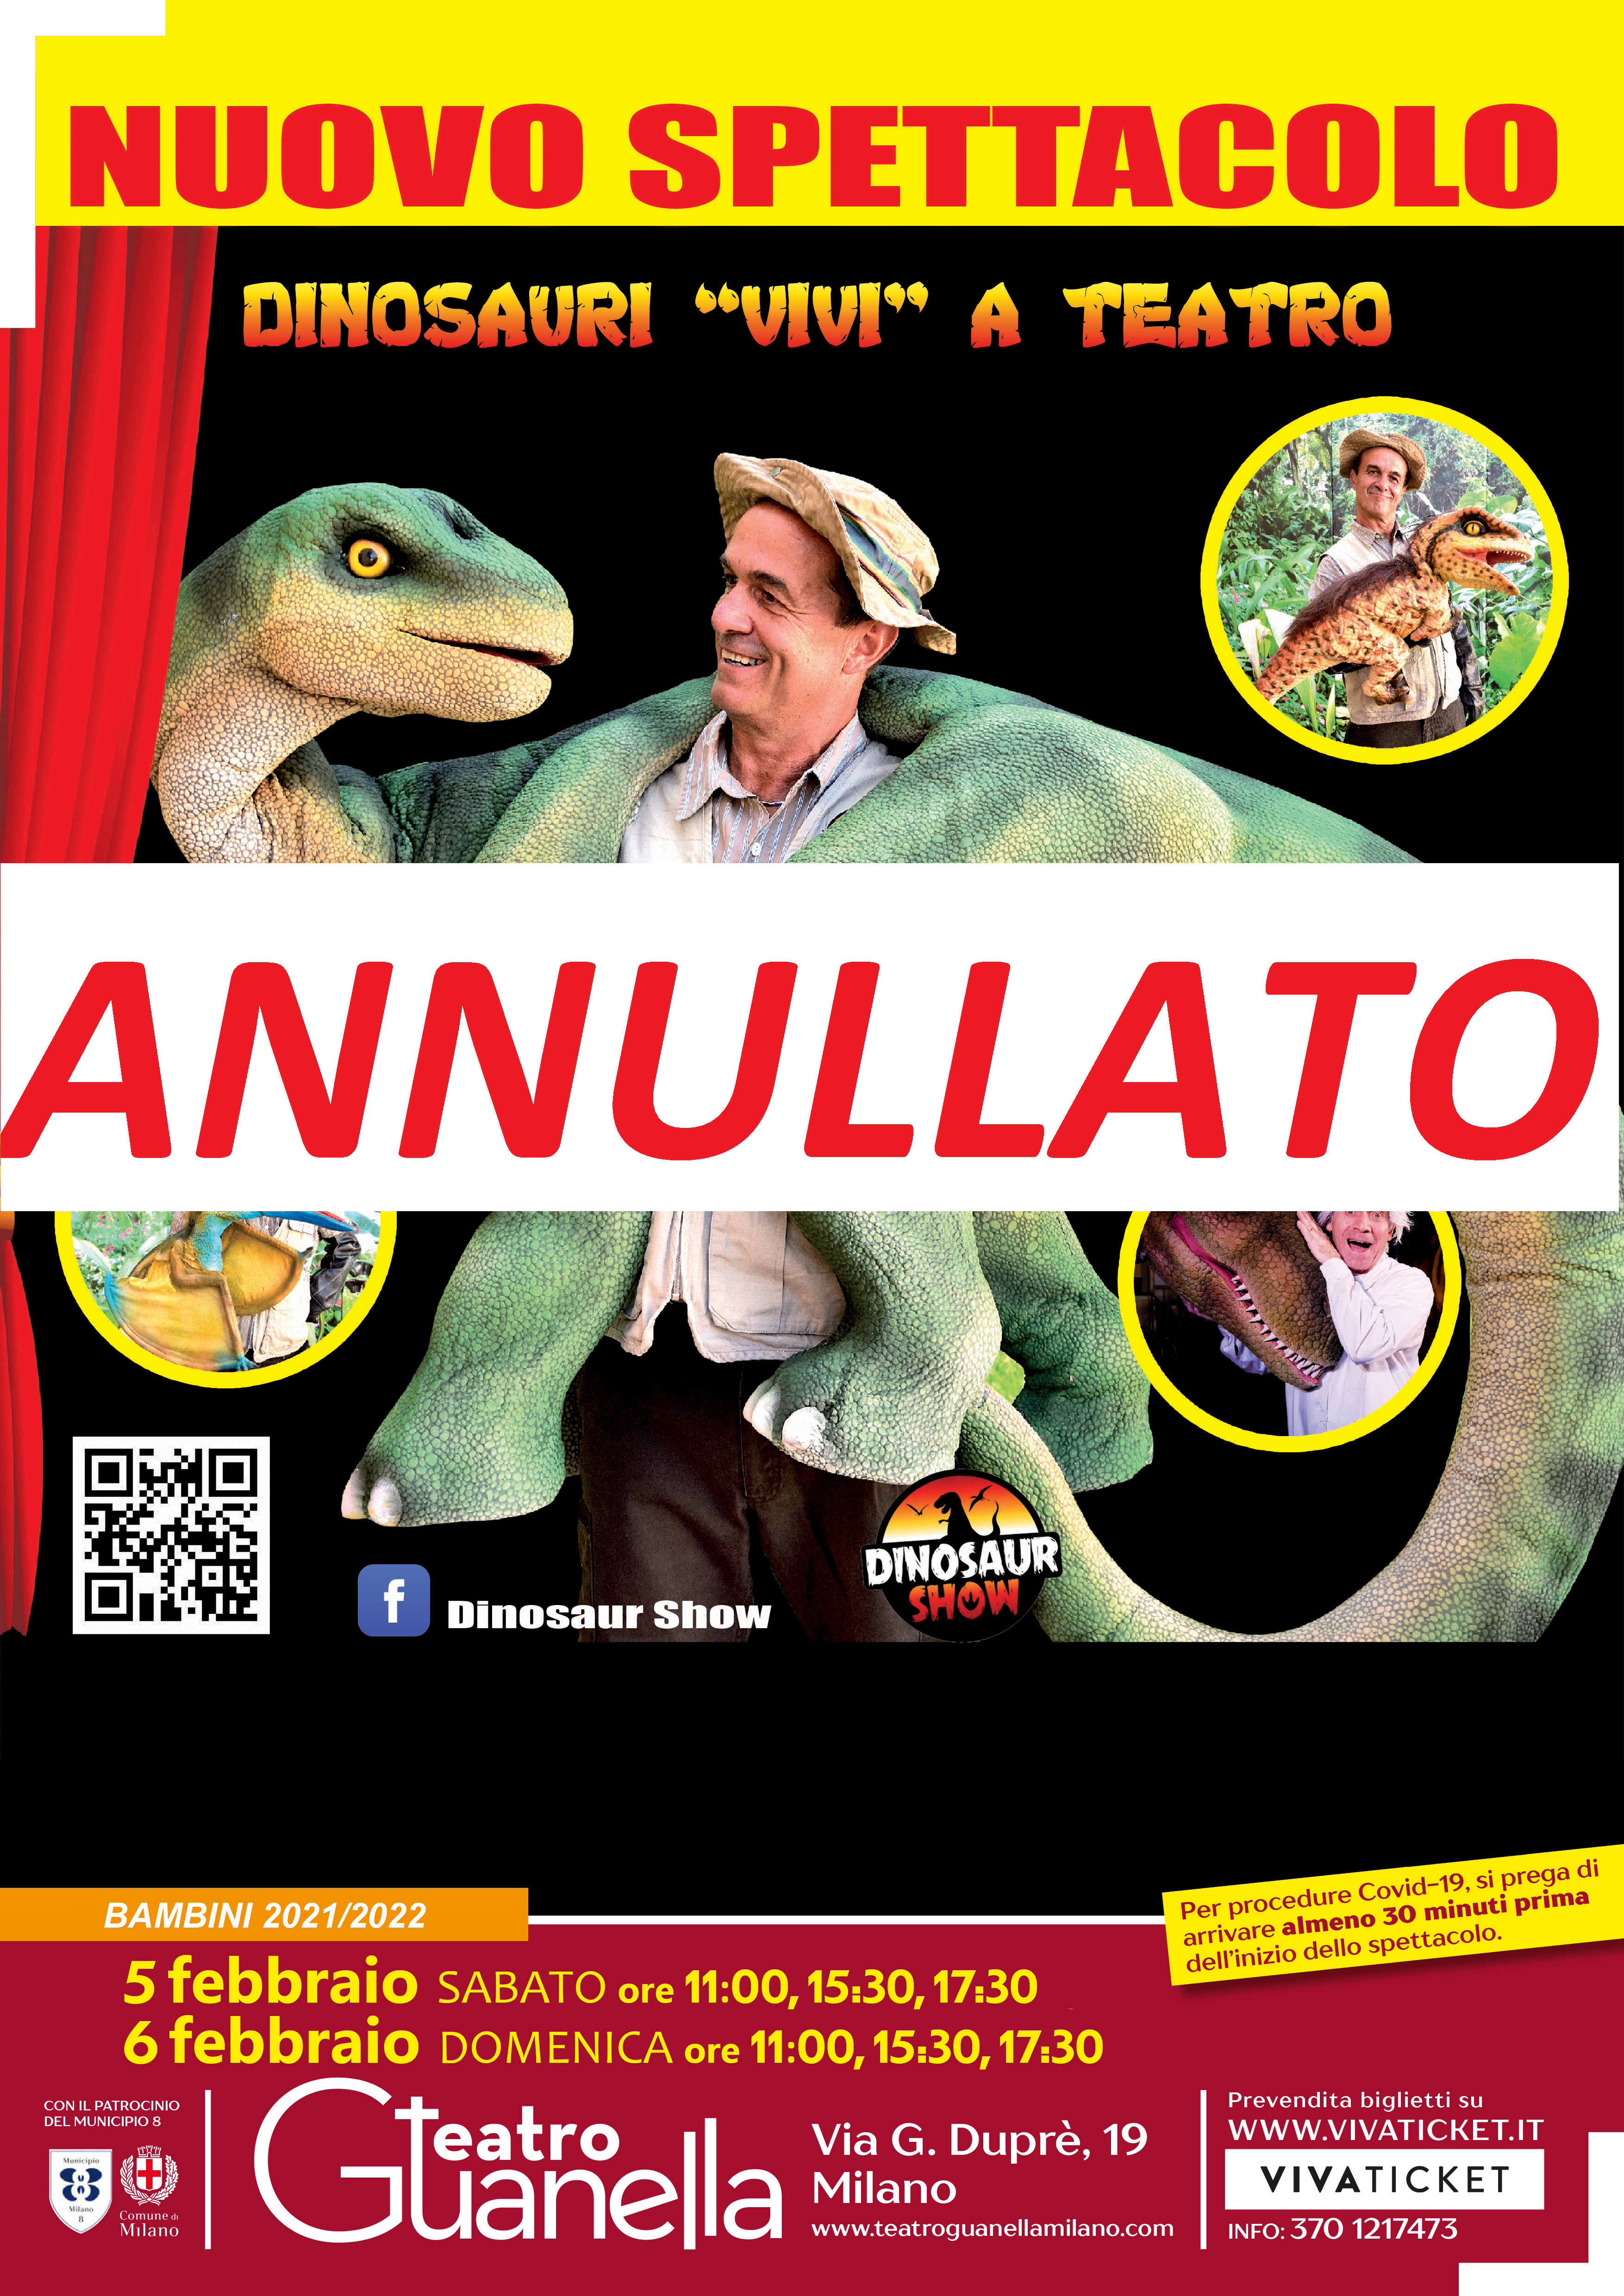 Dinosaur Show – DINOSAURI VIVI